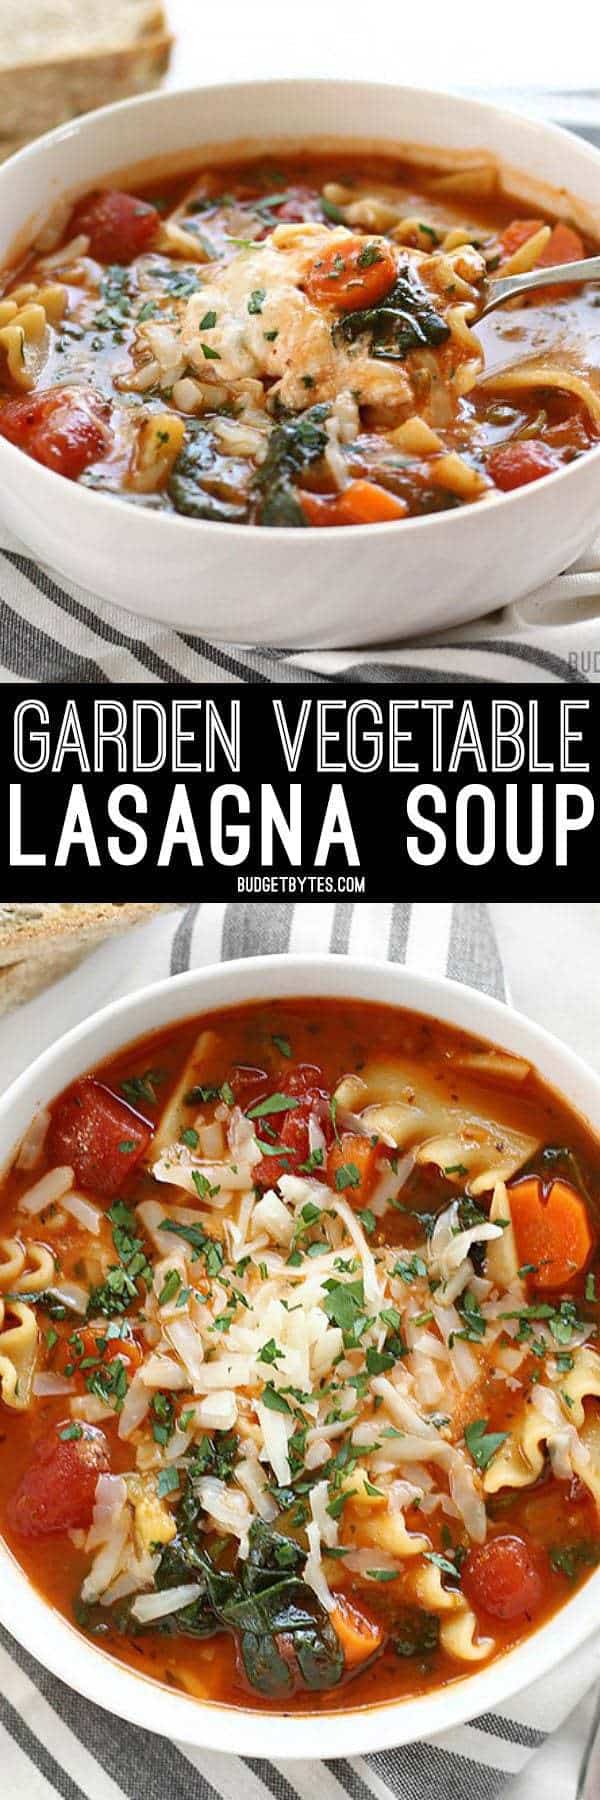 Garden Vegetable Lasagna Soup Recipe - Budget Bytes